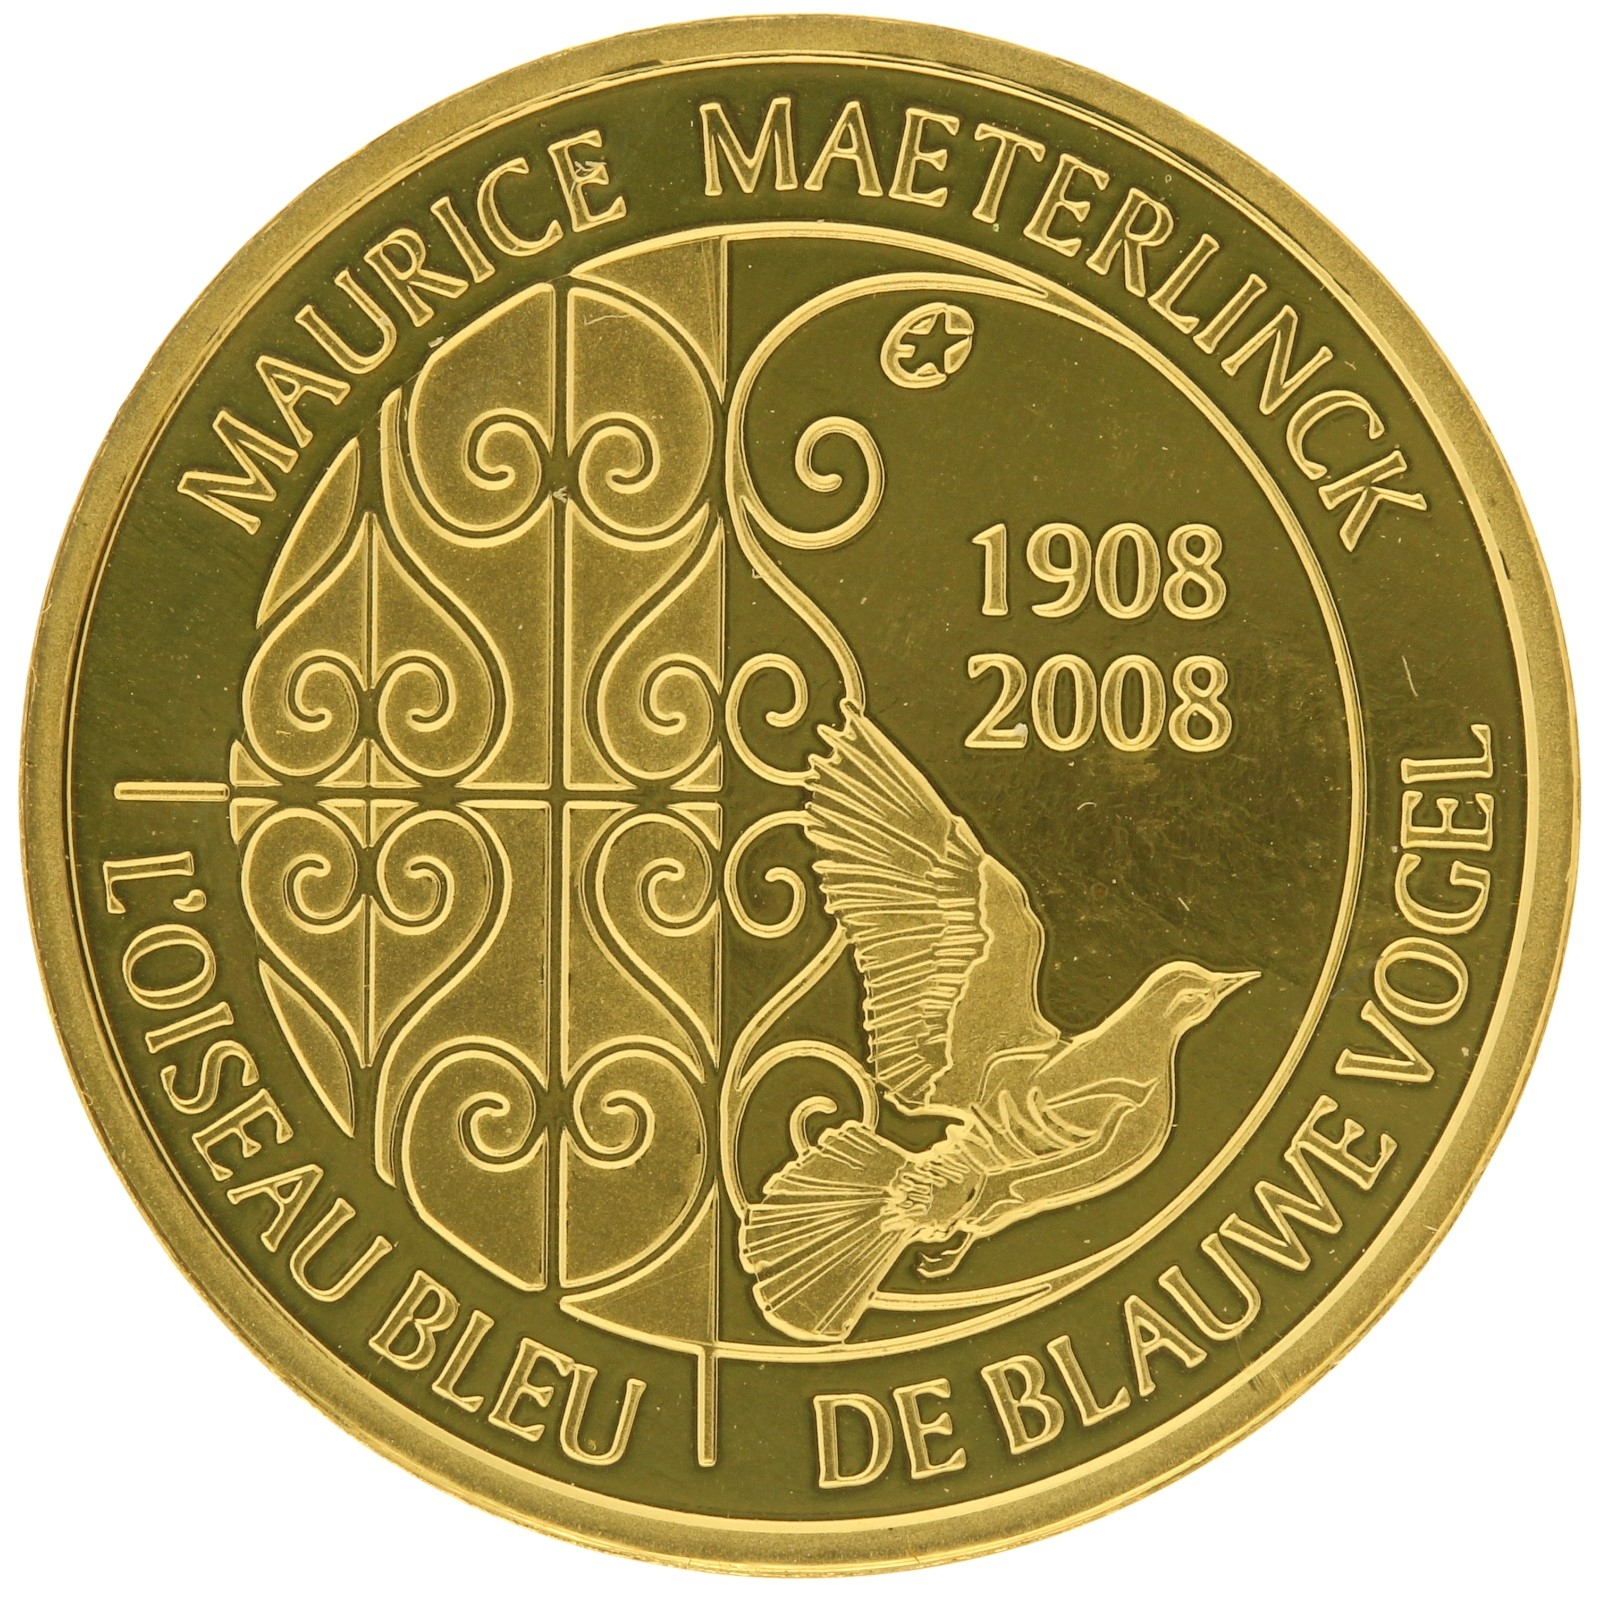 Belgium - 50 euro - 2008 - Maurice Maeterlinck